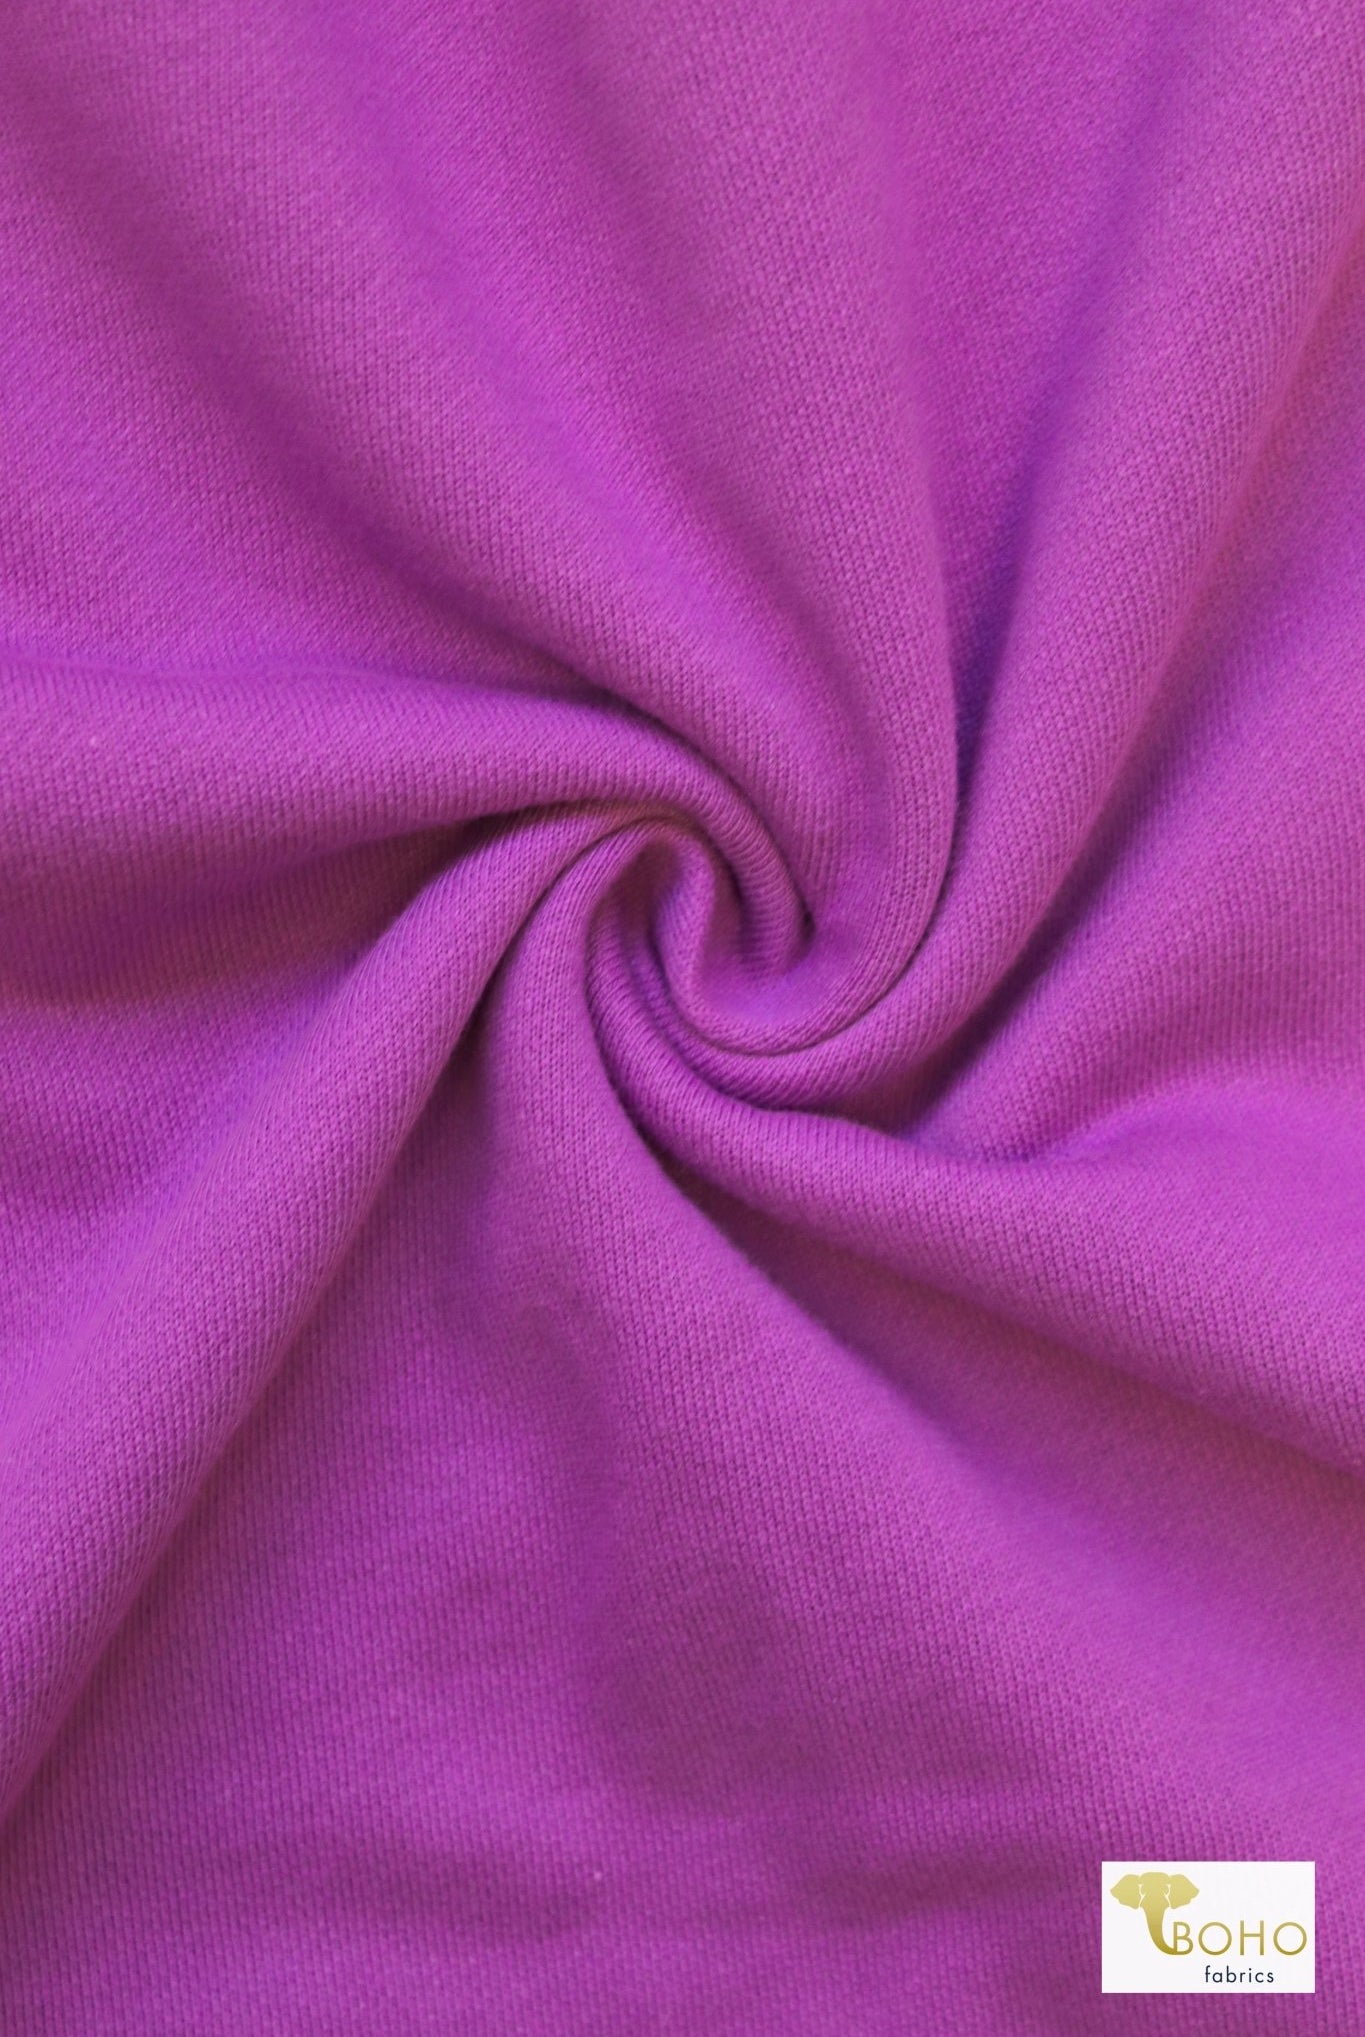 1x1 Rib Knit, Grape. SOLD BY THE HALF YARD! - Boho Fabrics